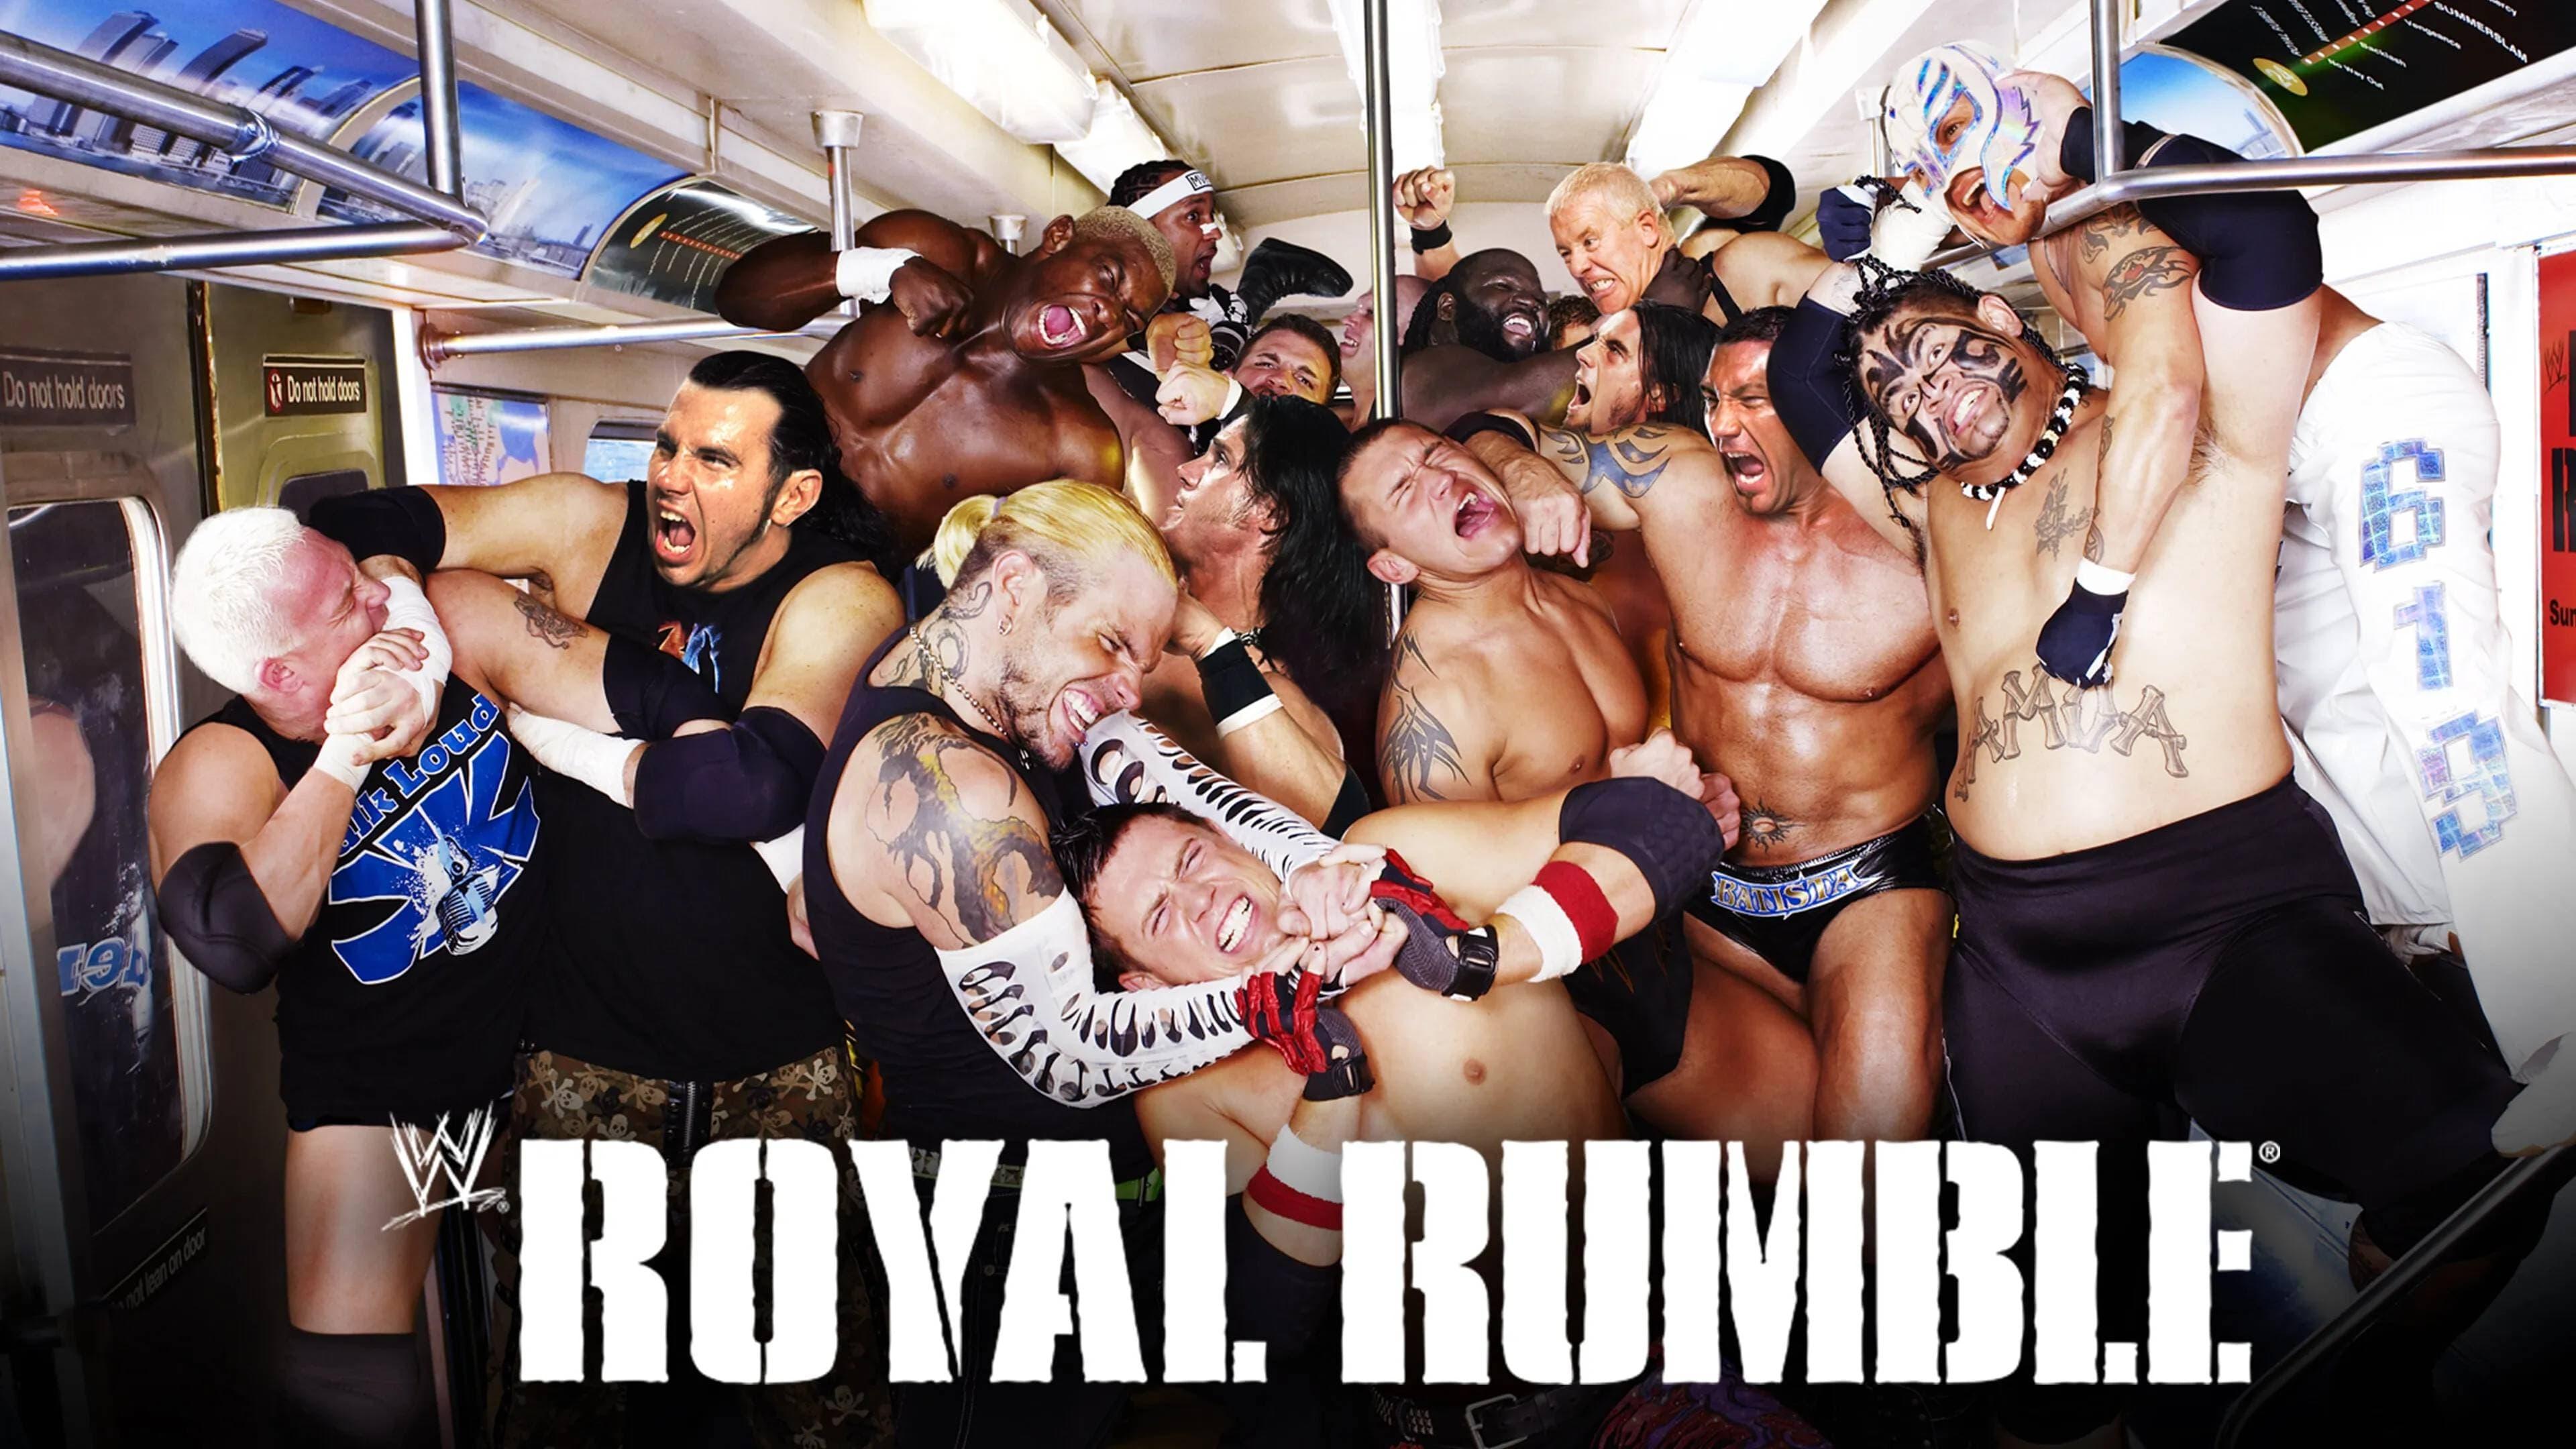 WWE Royal Rumble 2008 backdrop